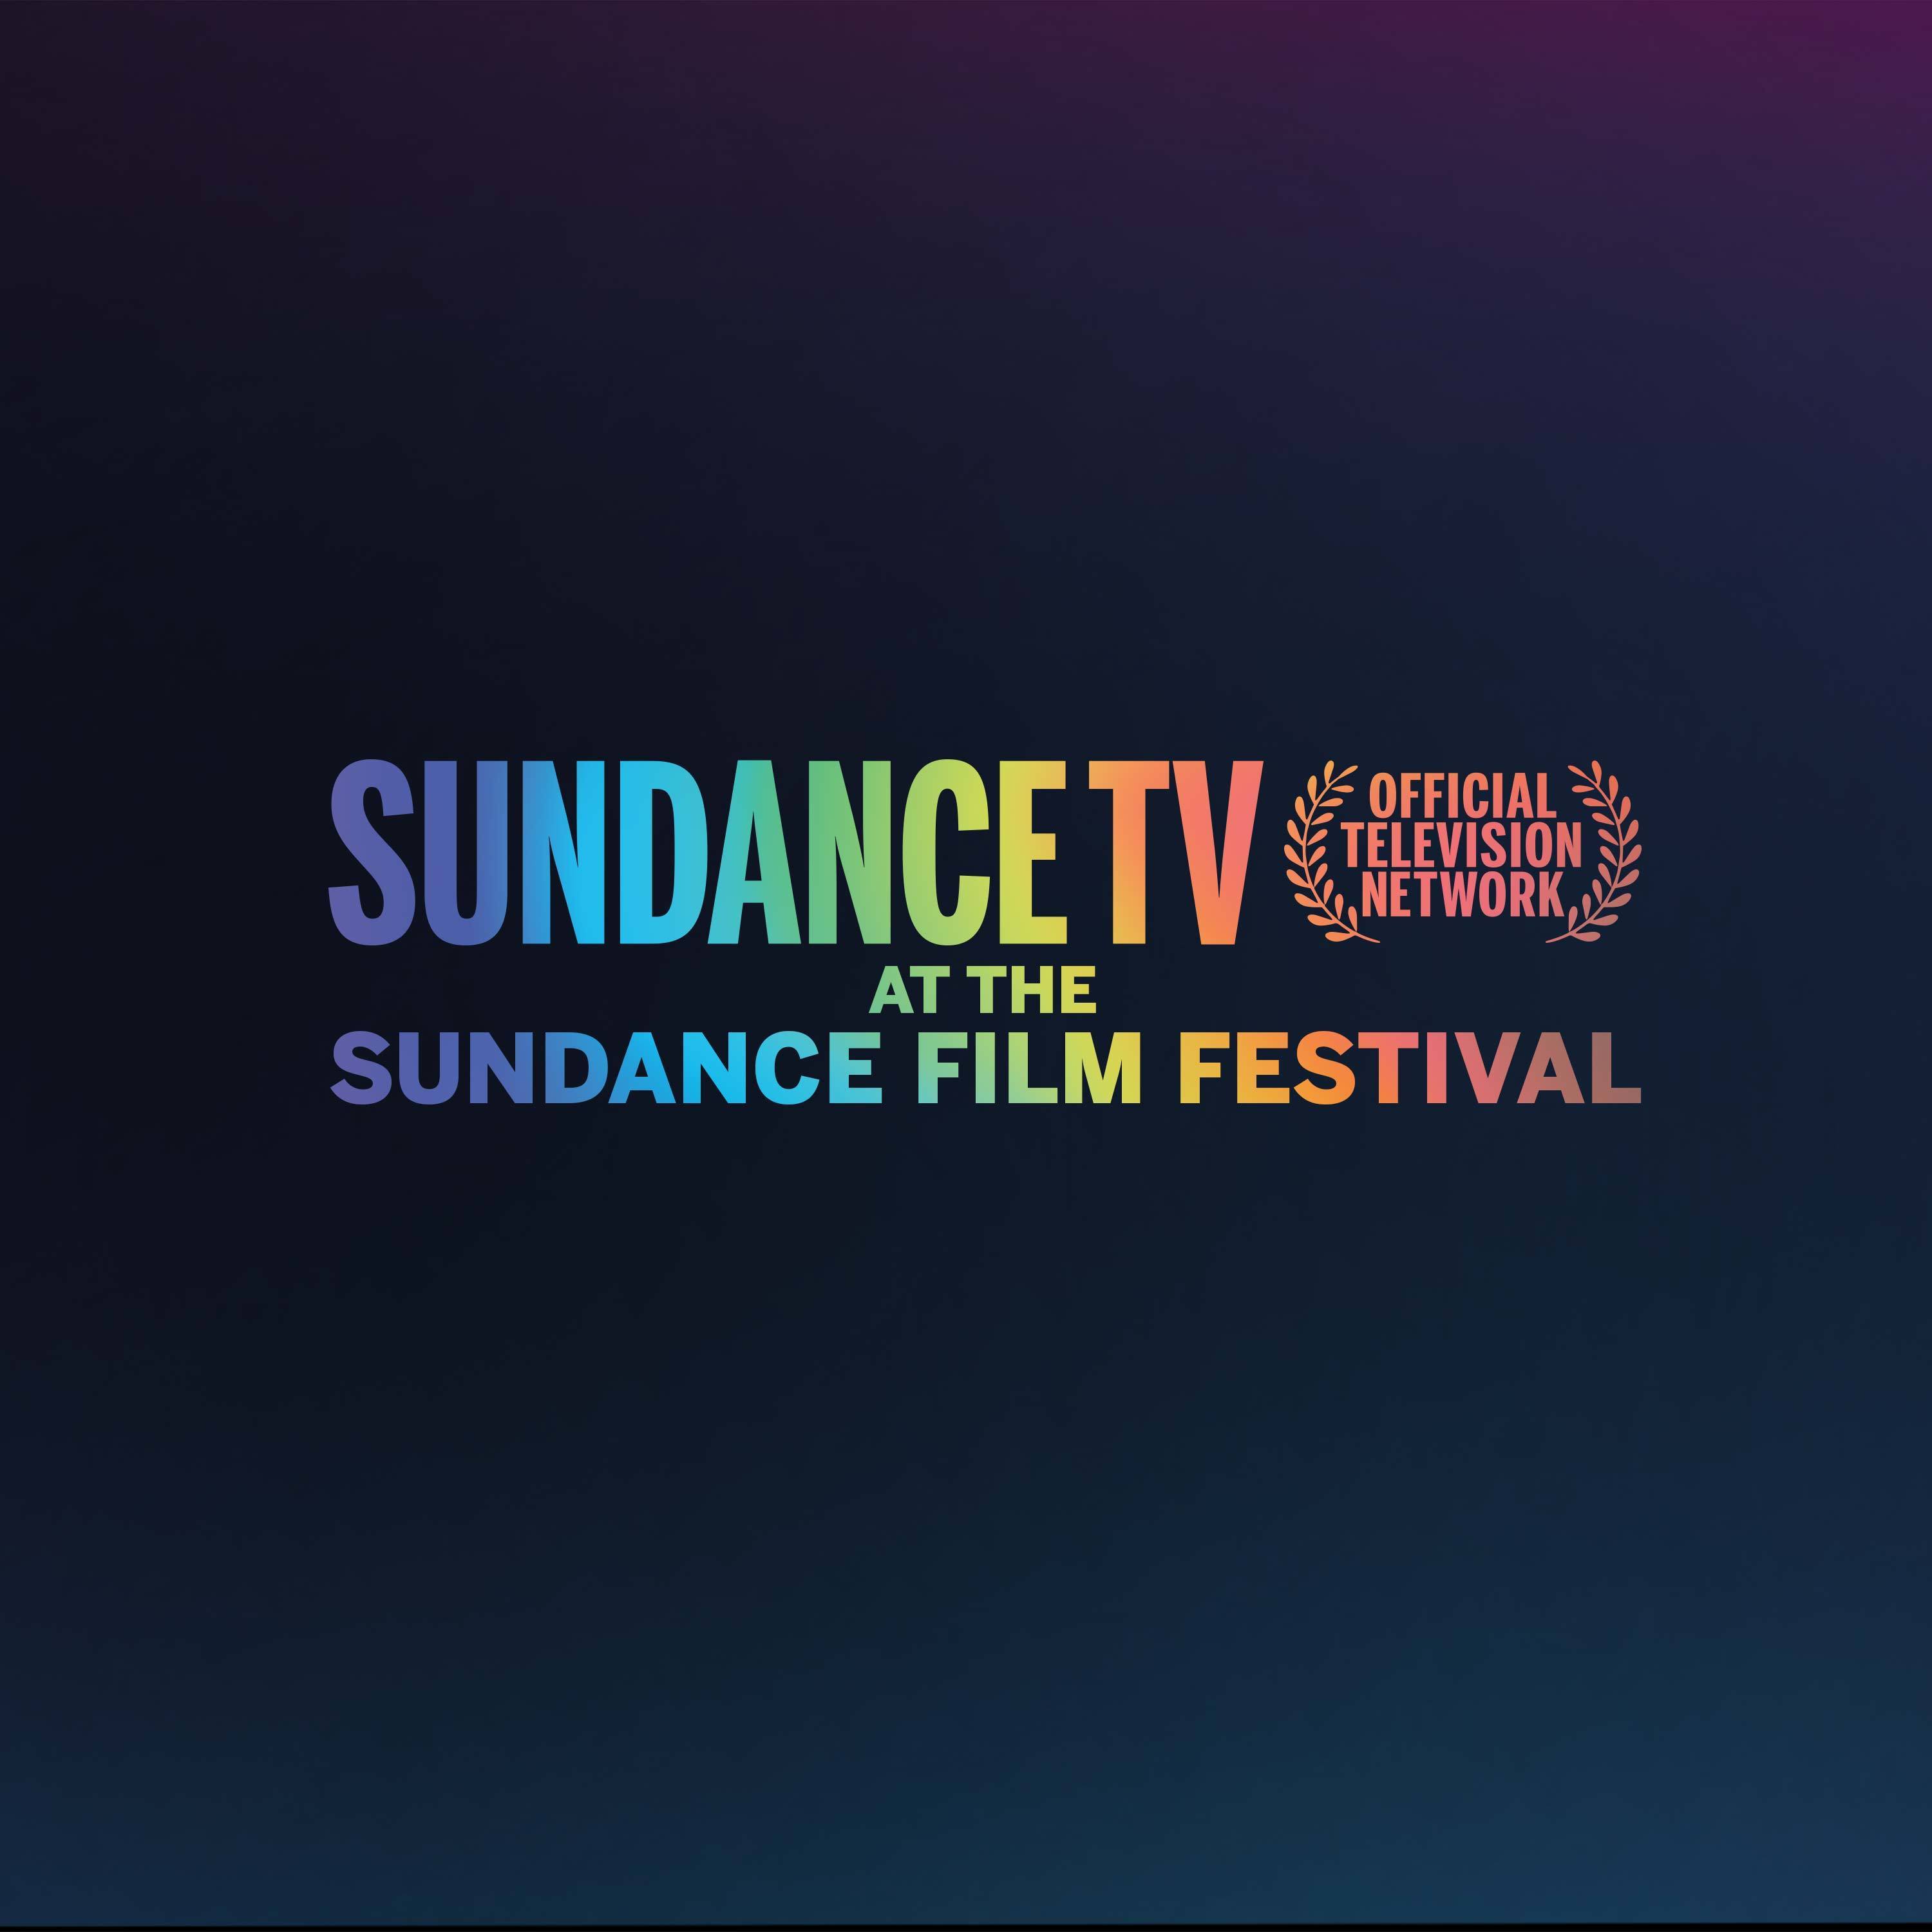 SundanceTV at the 2020 Sundance Film Festival